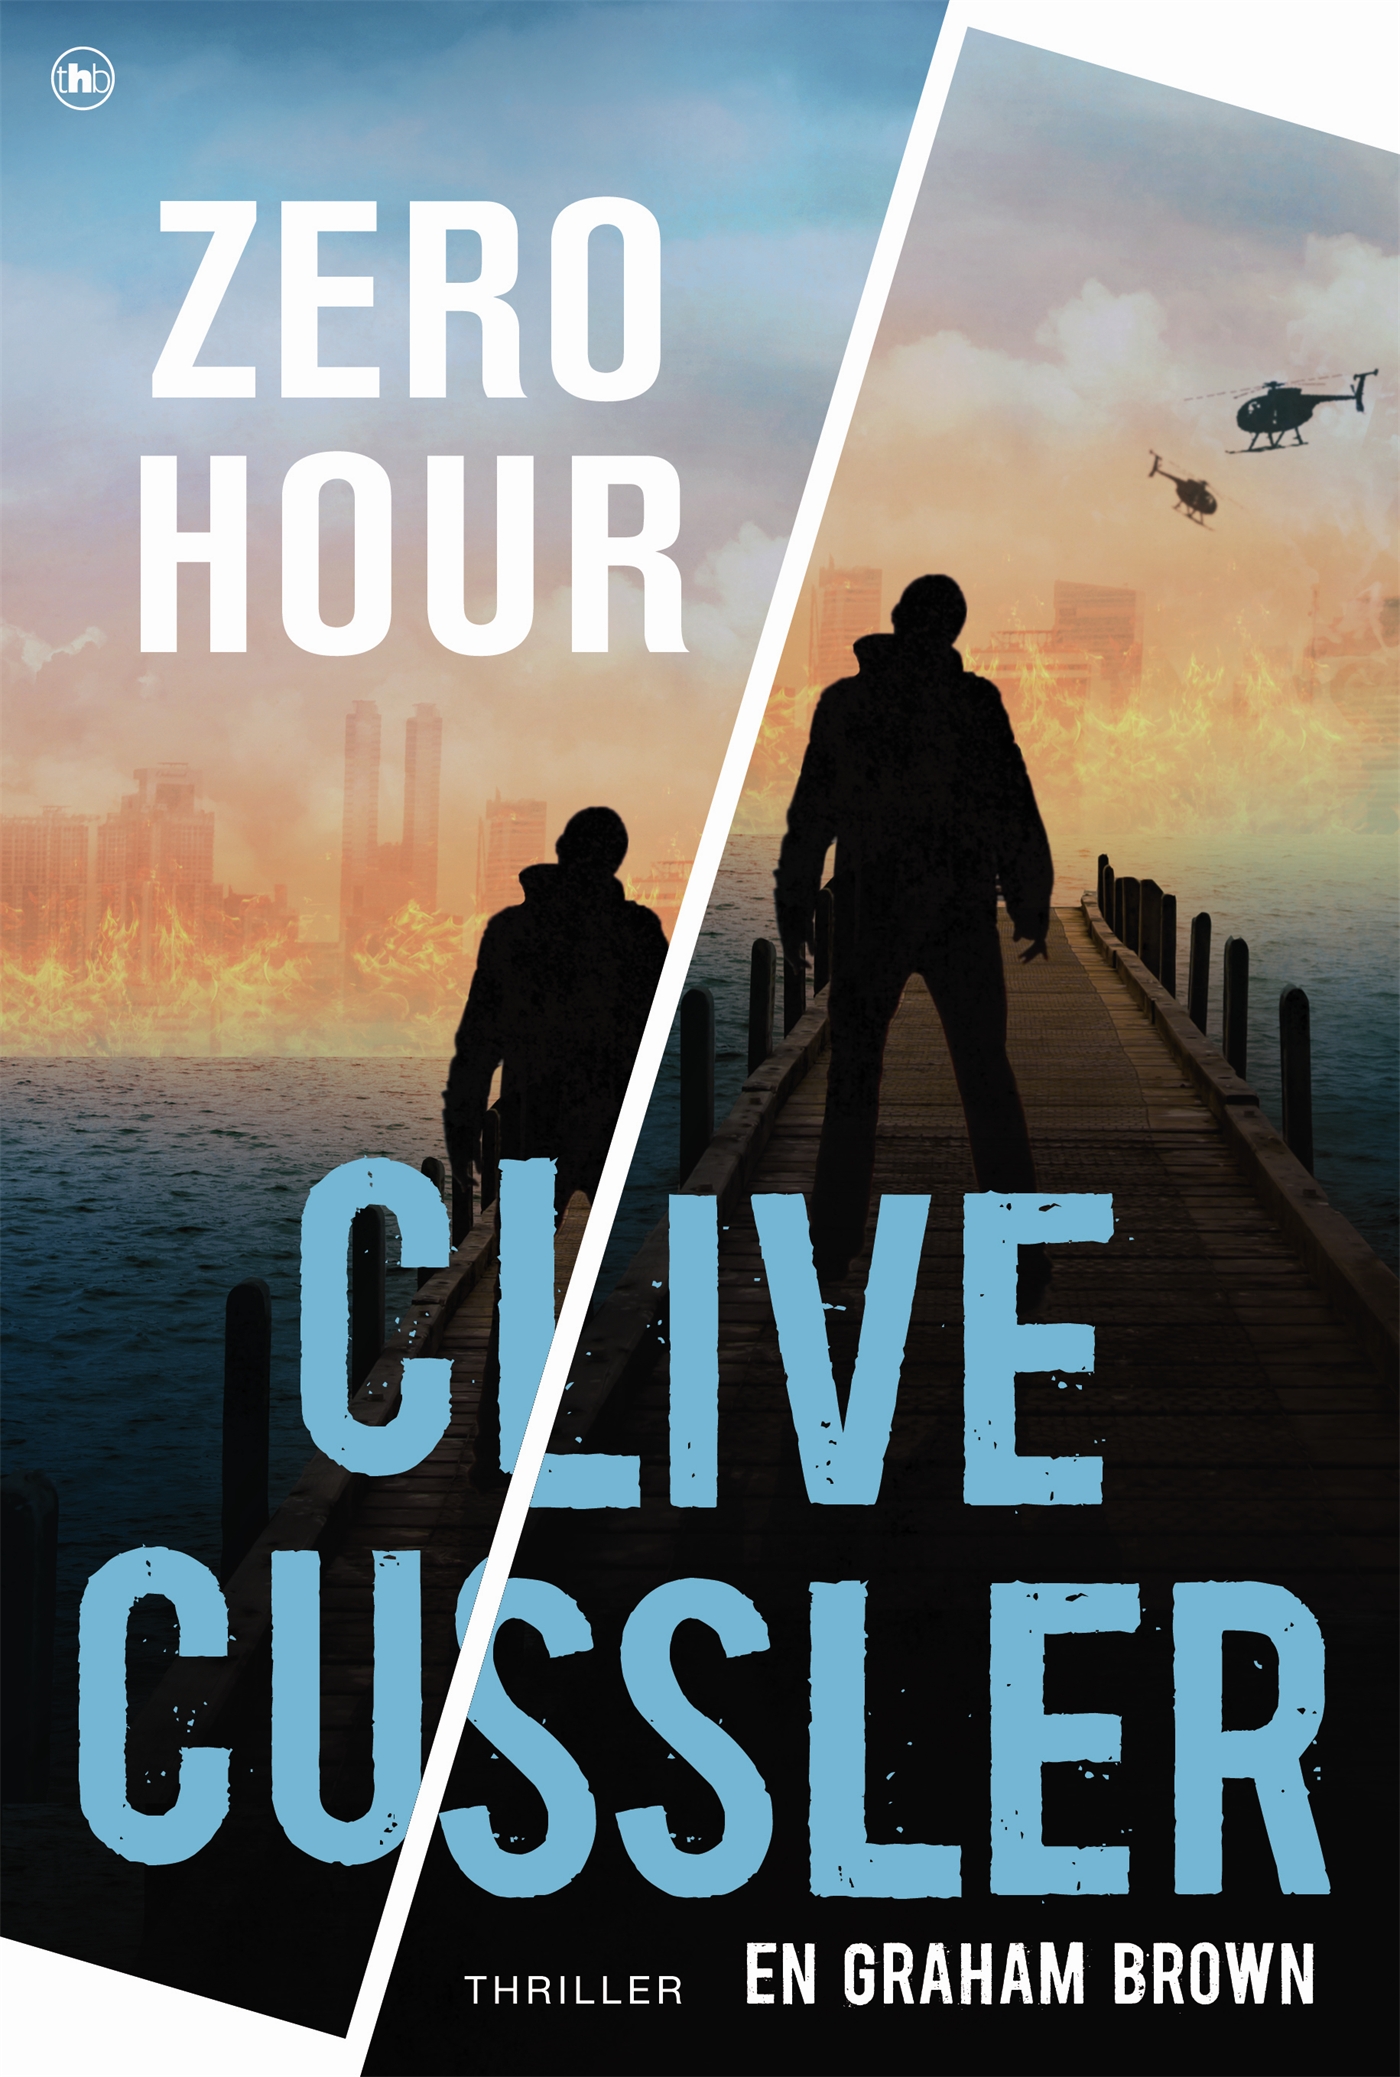 Zero hour (Ebook)